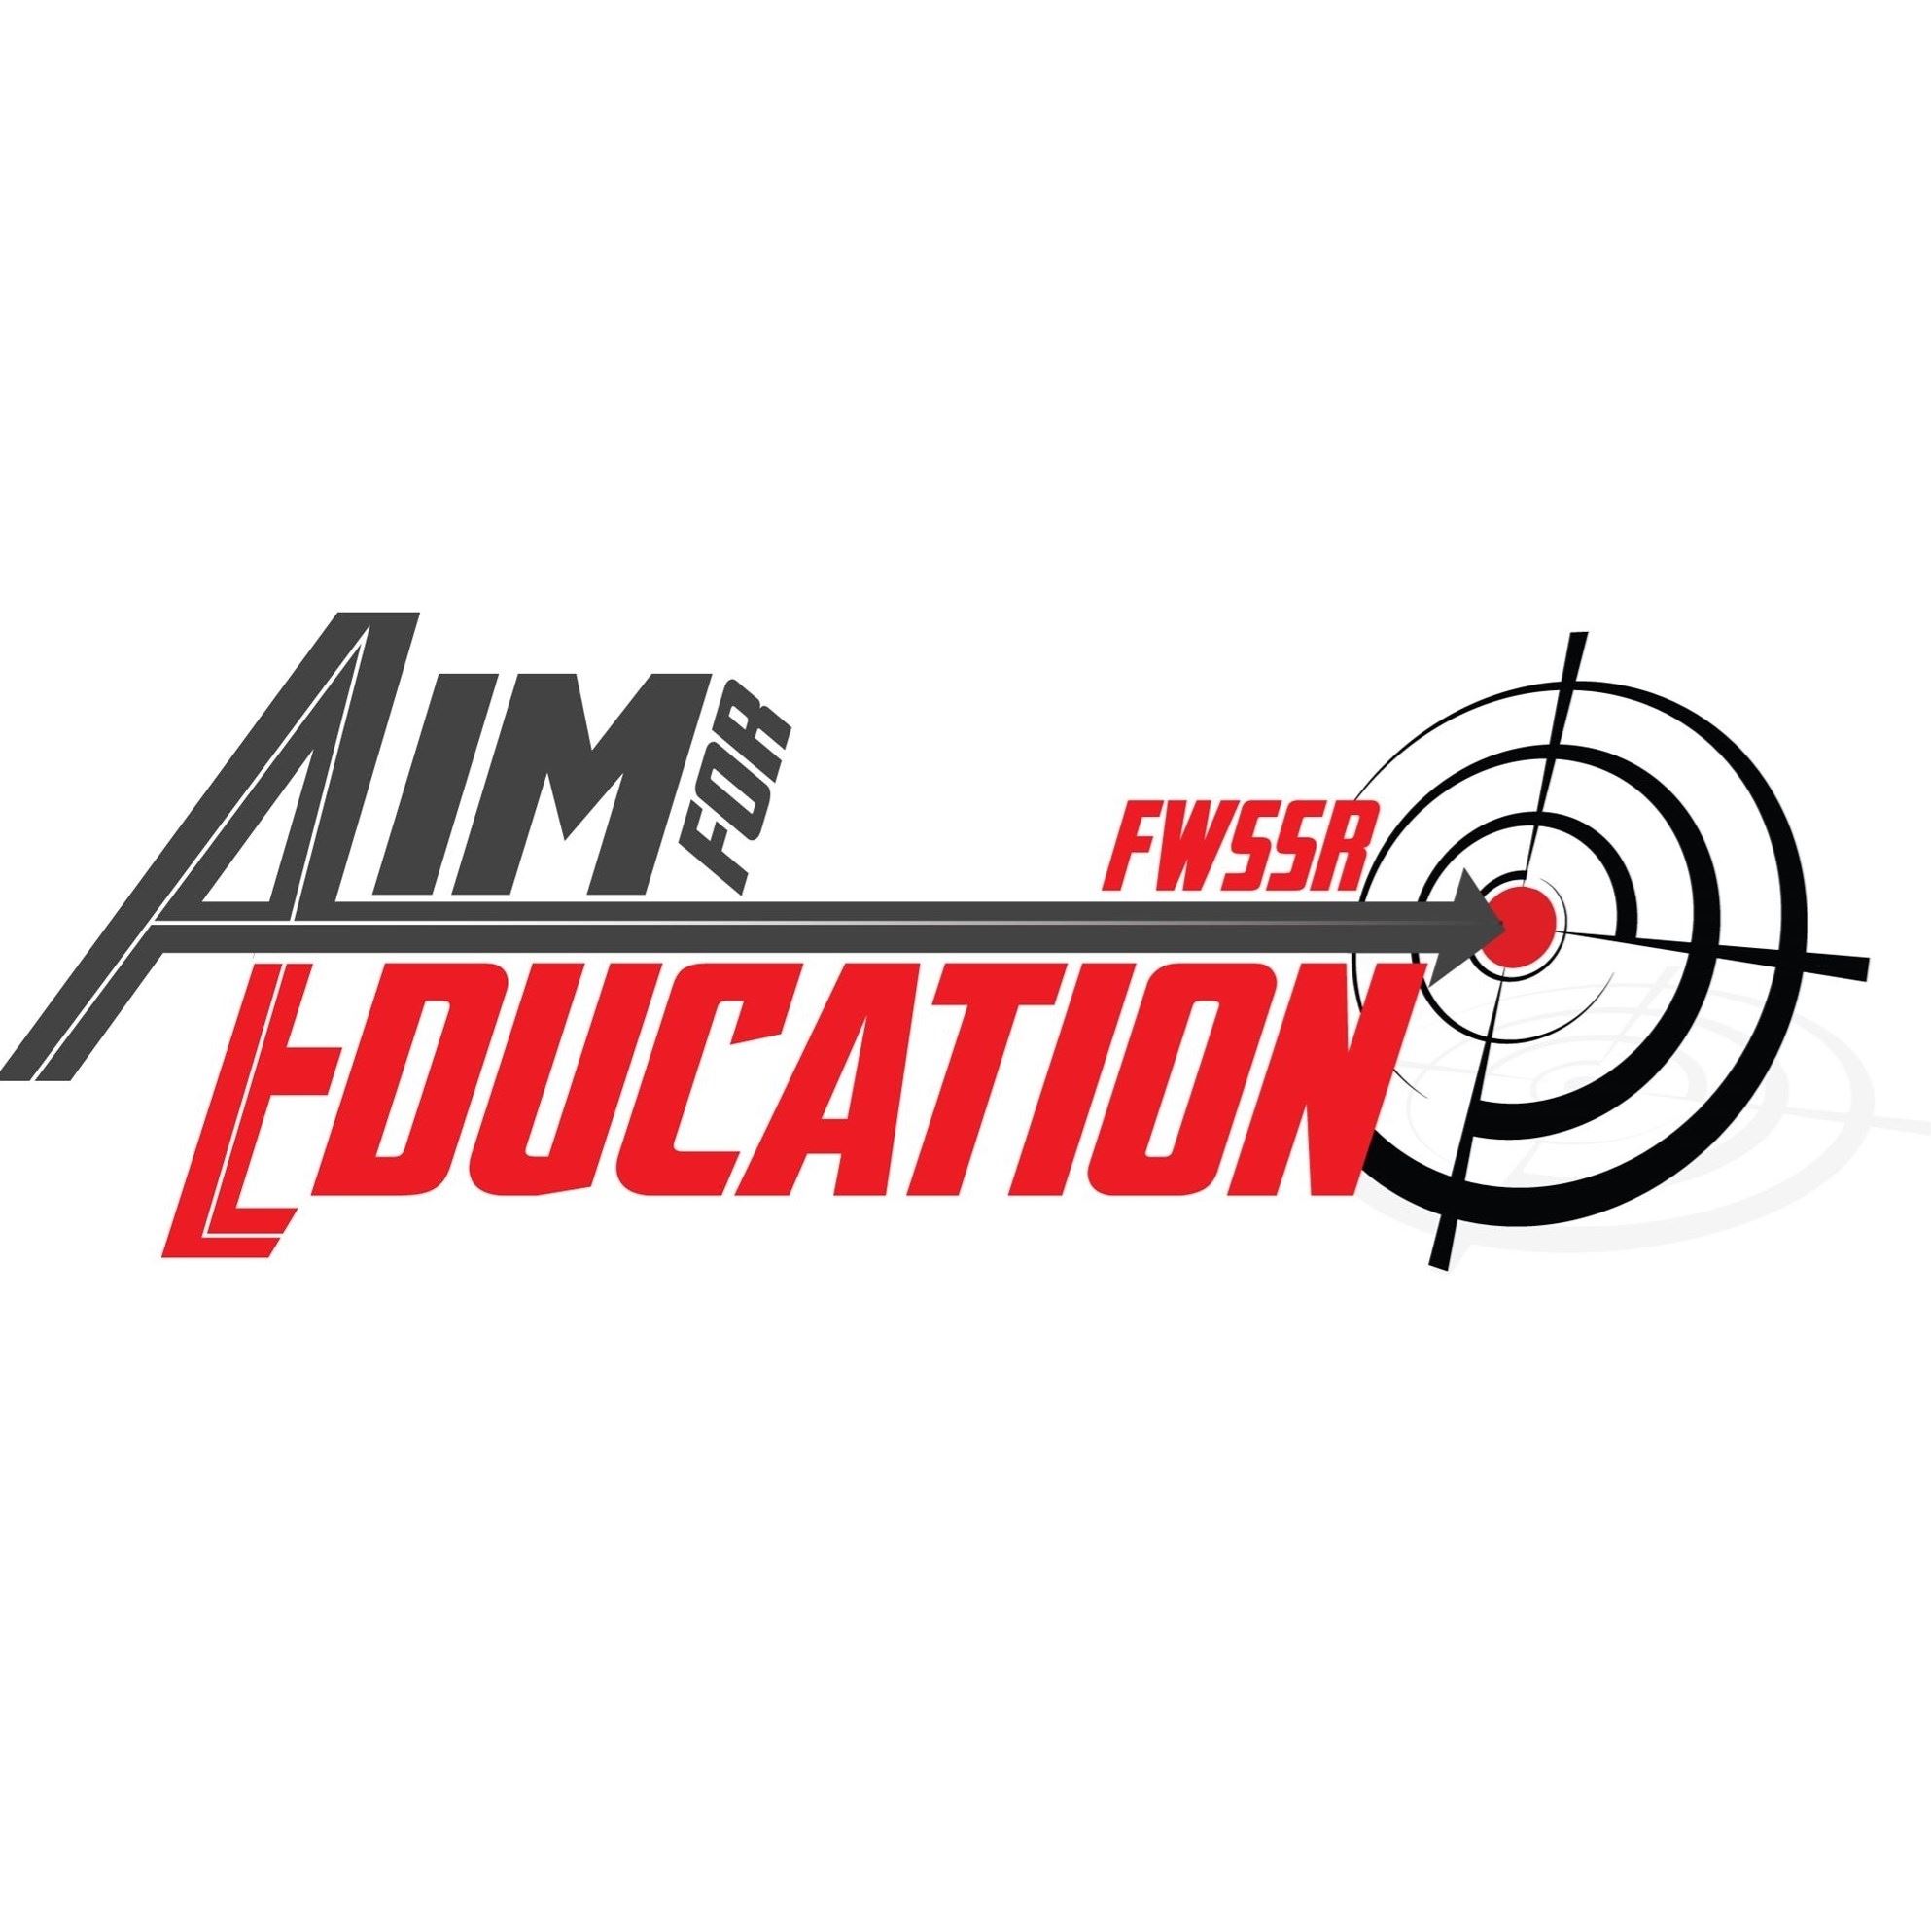 AIM FOR EDUCATION